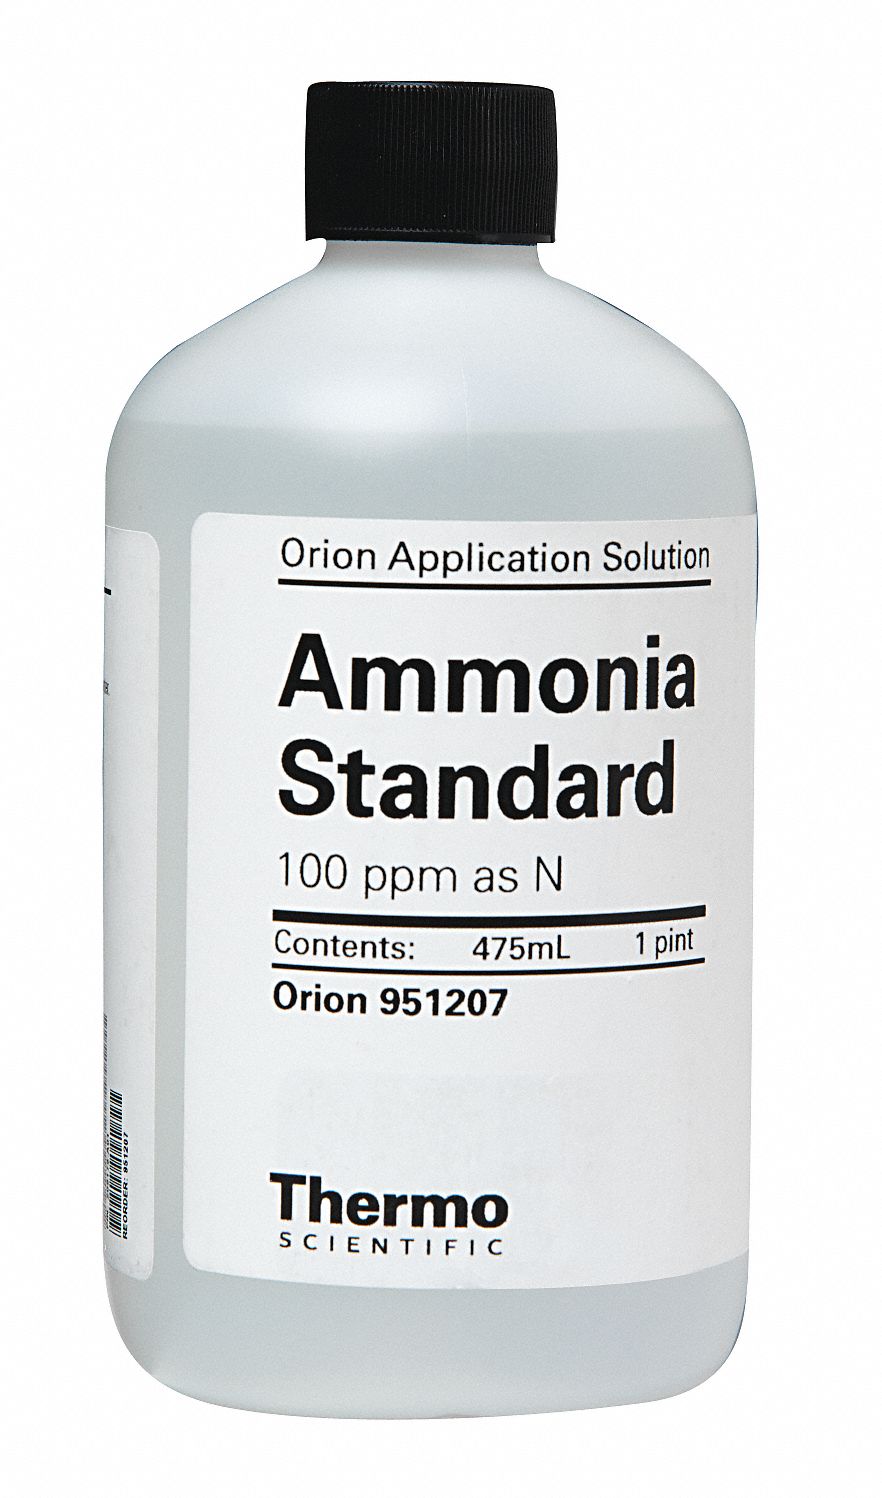 6GNL1 - Ammonia Standard 100ppm as N 1 Pint